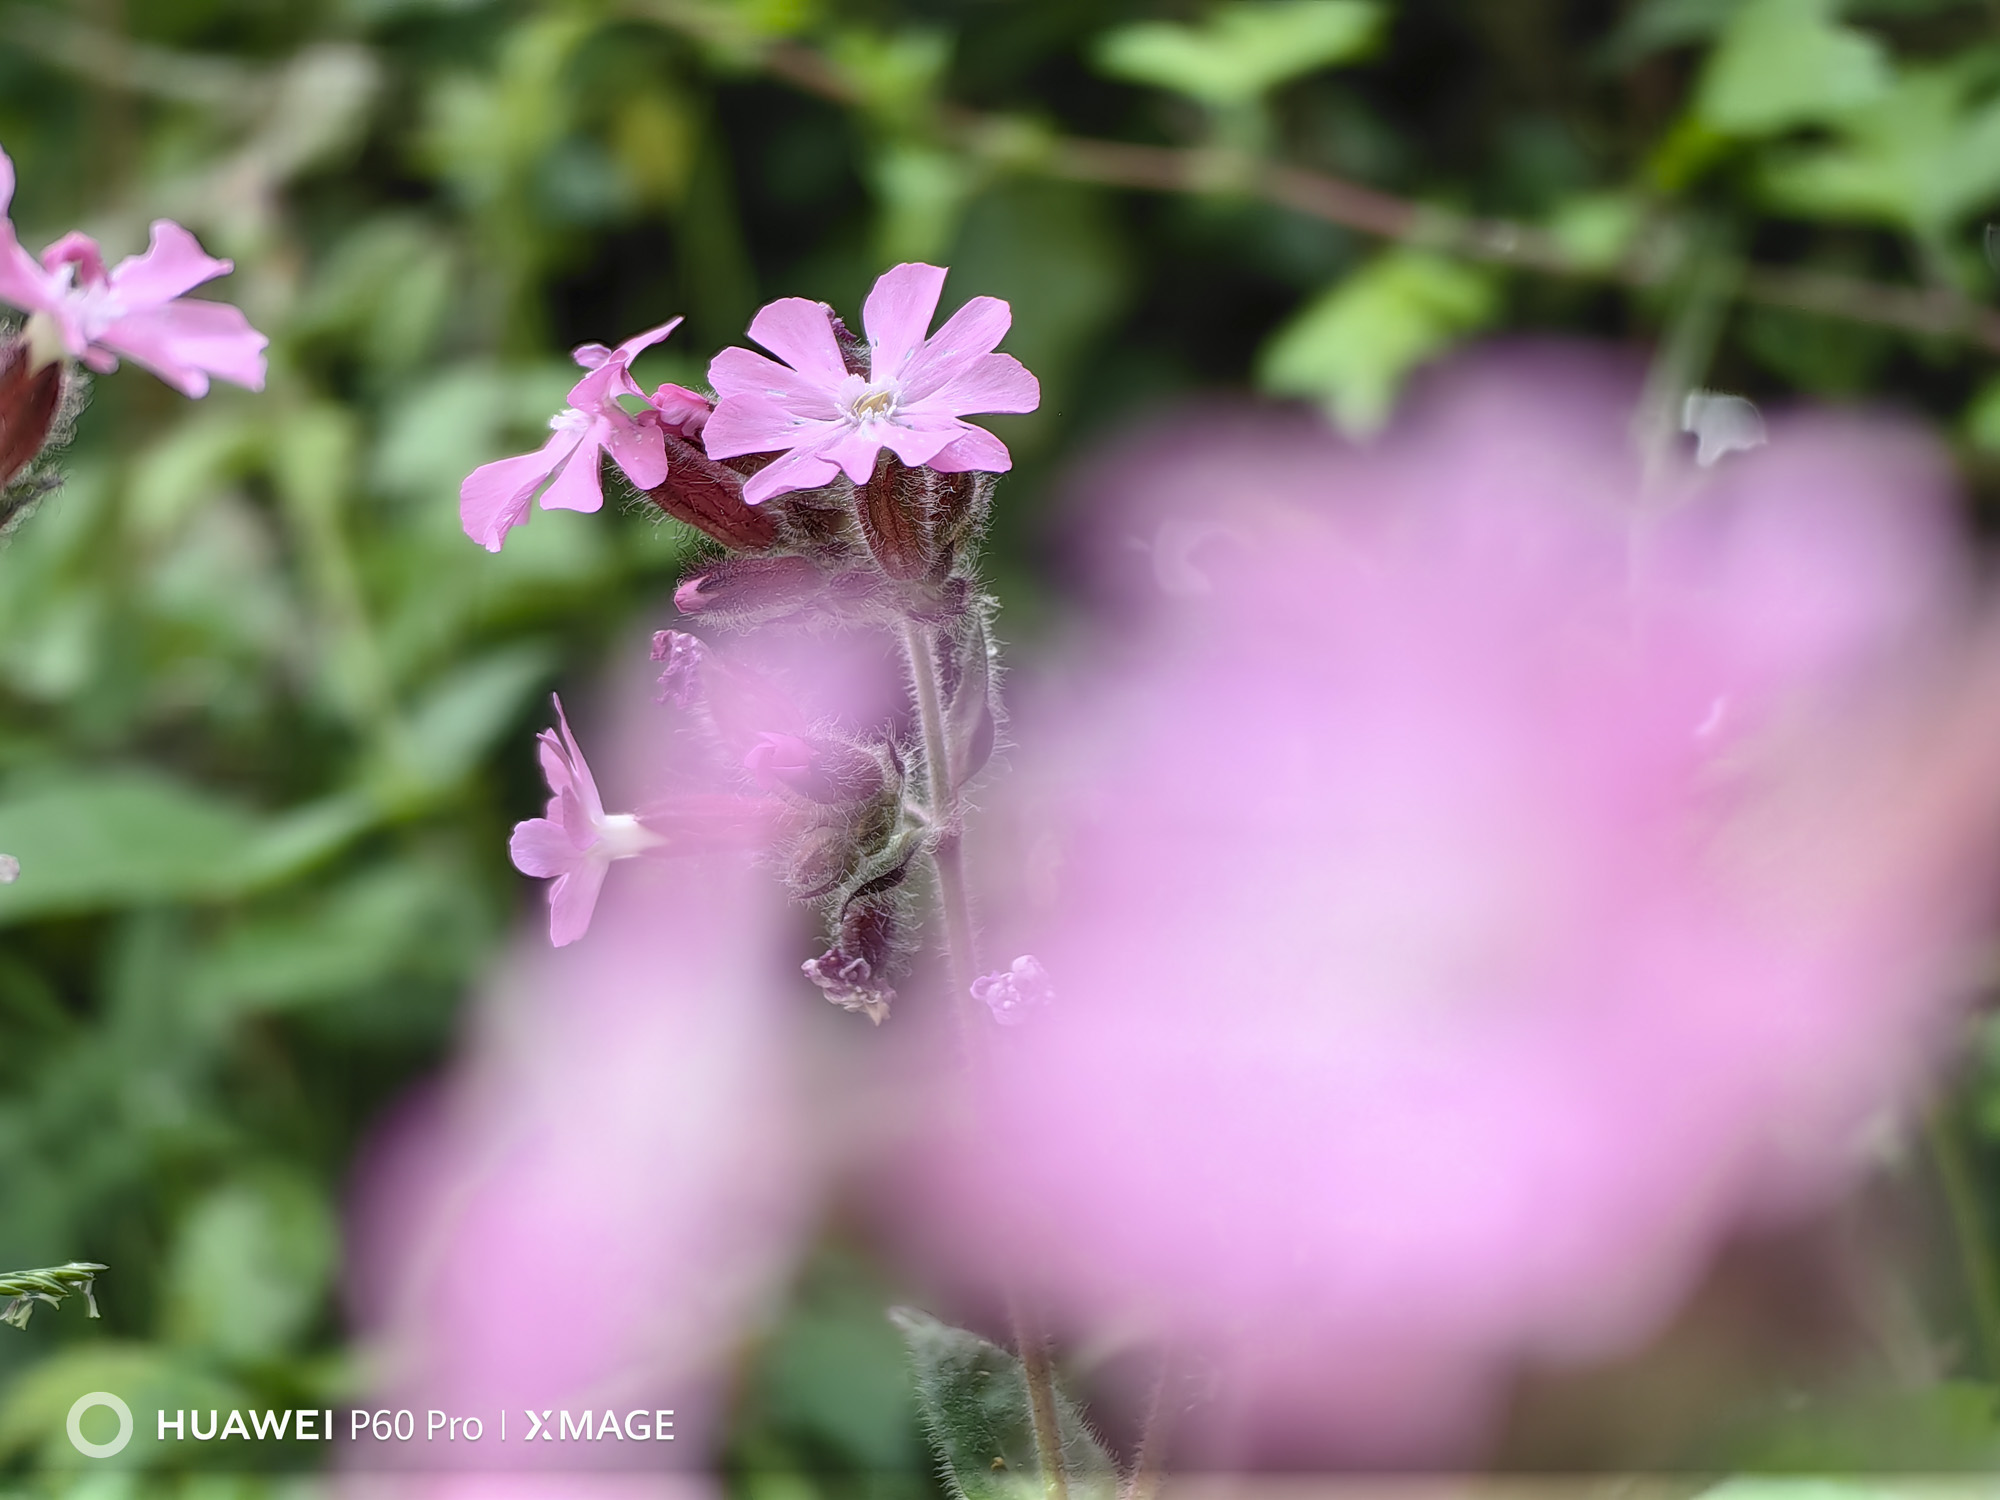 Huawei P60 Pro macro photography of a pink flower using 3.5x telephoto camera